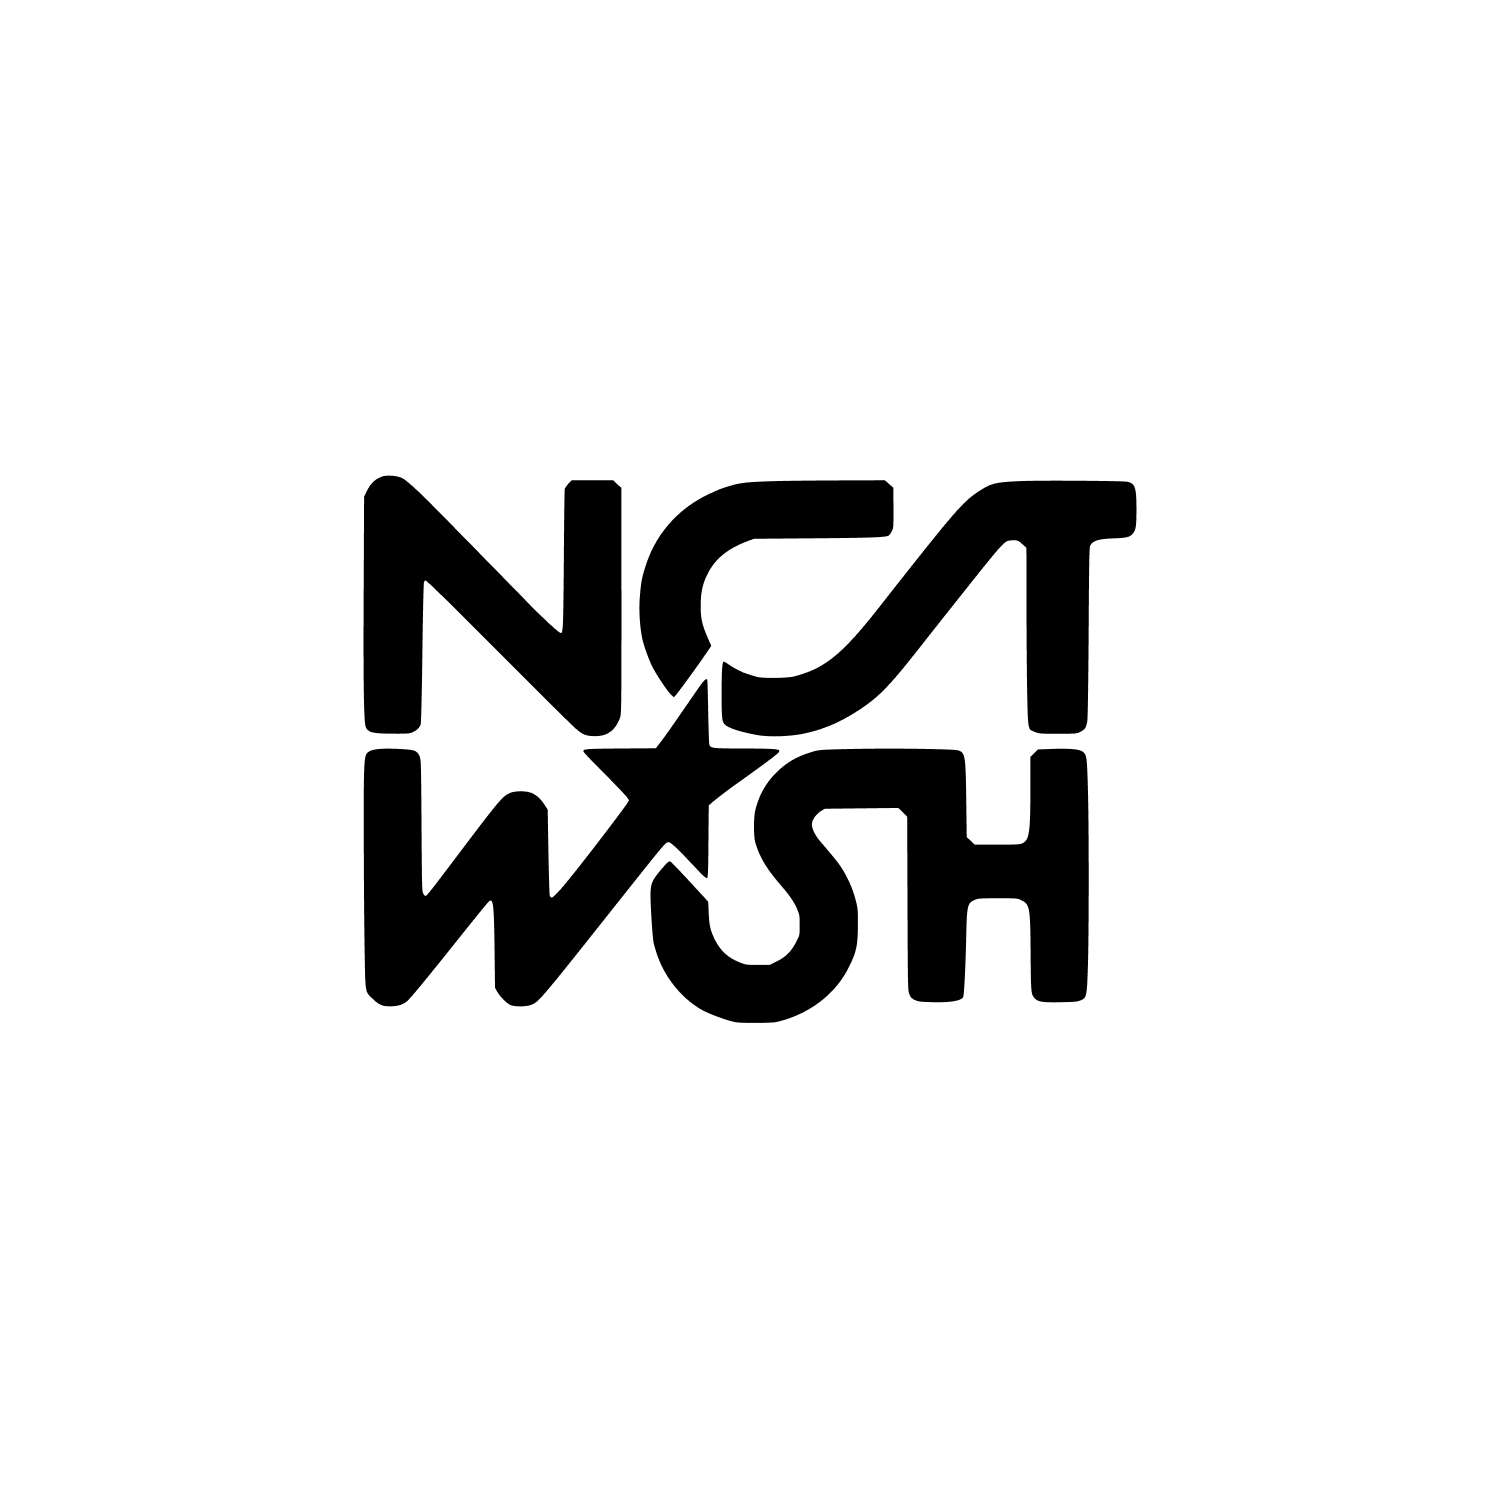 Comeback ✨ NCT WISH - Songbird